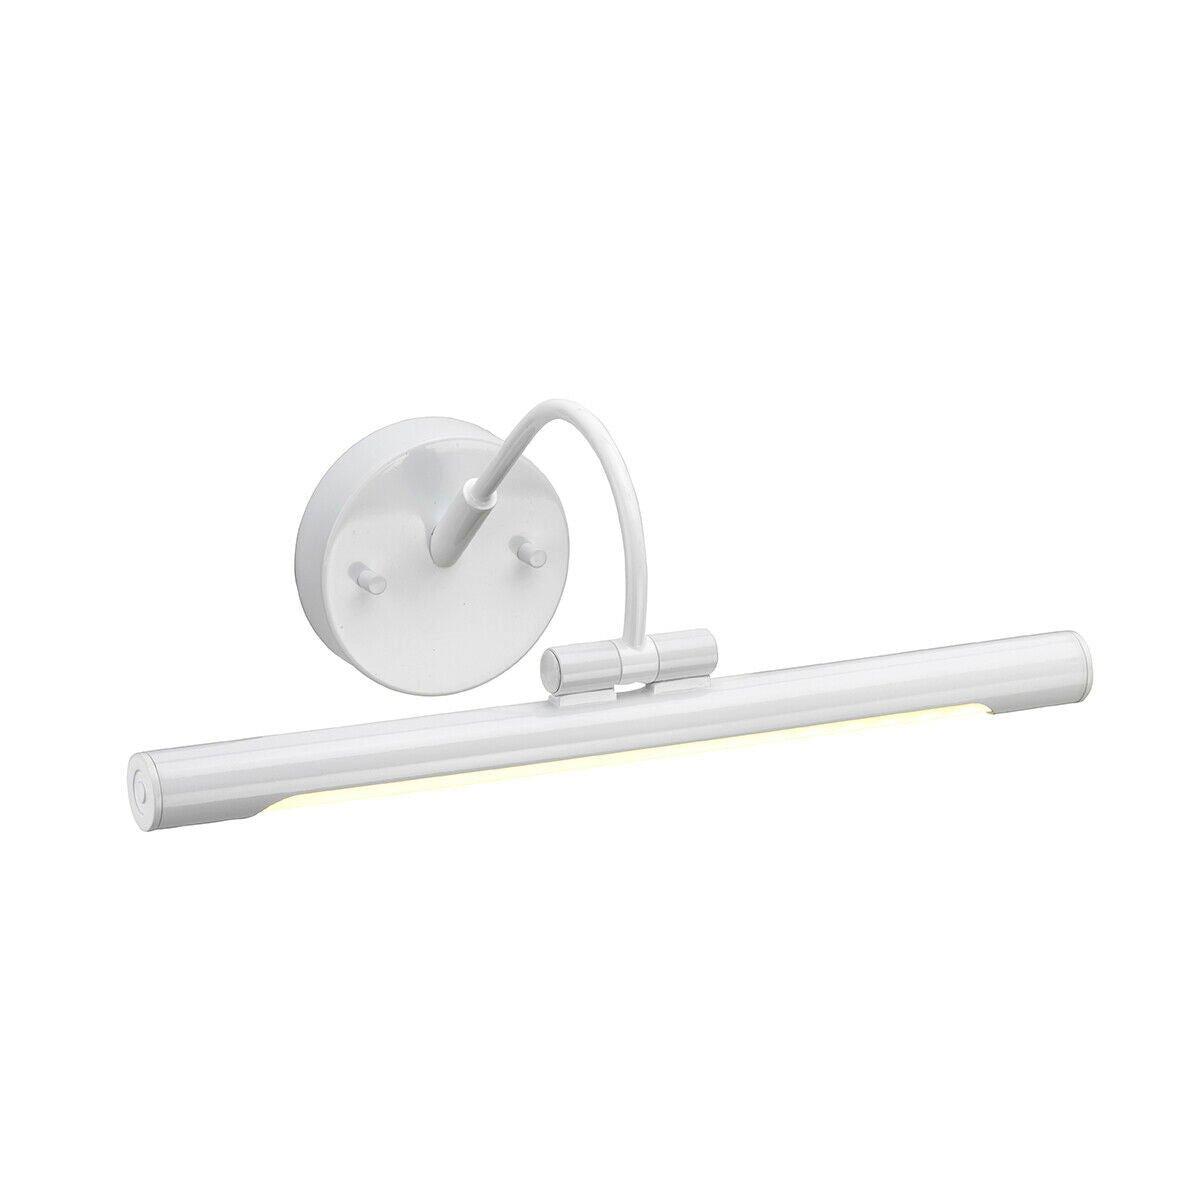 Single Bulb Adjustable LED Fitting Picture Light White LED 4.6W Bulb